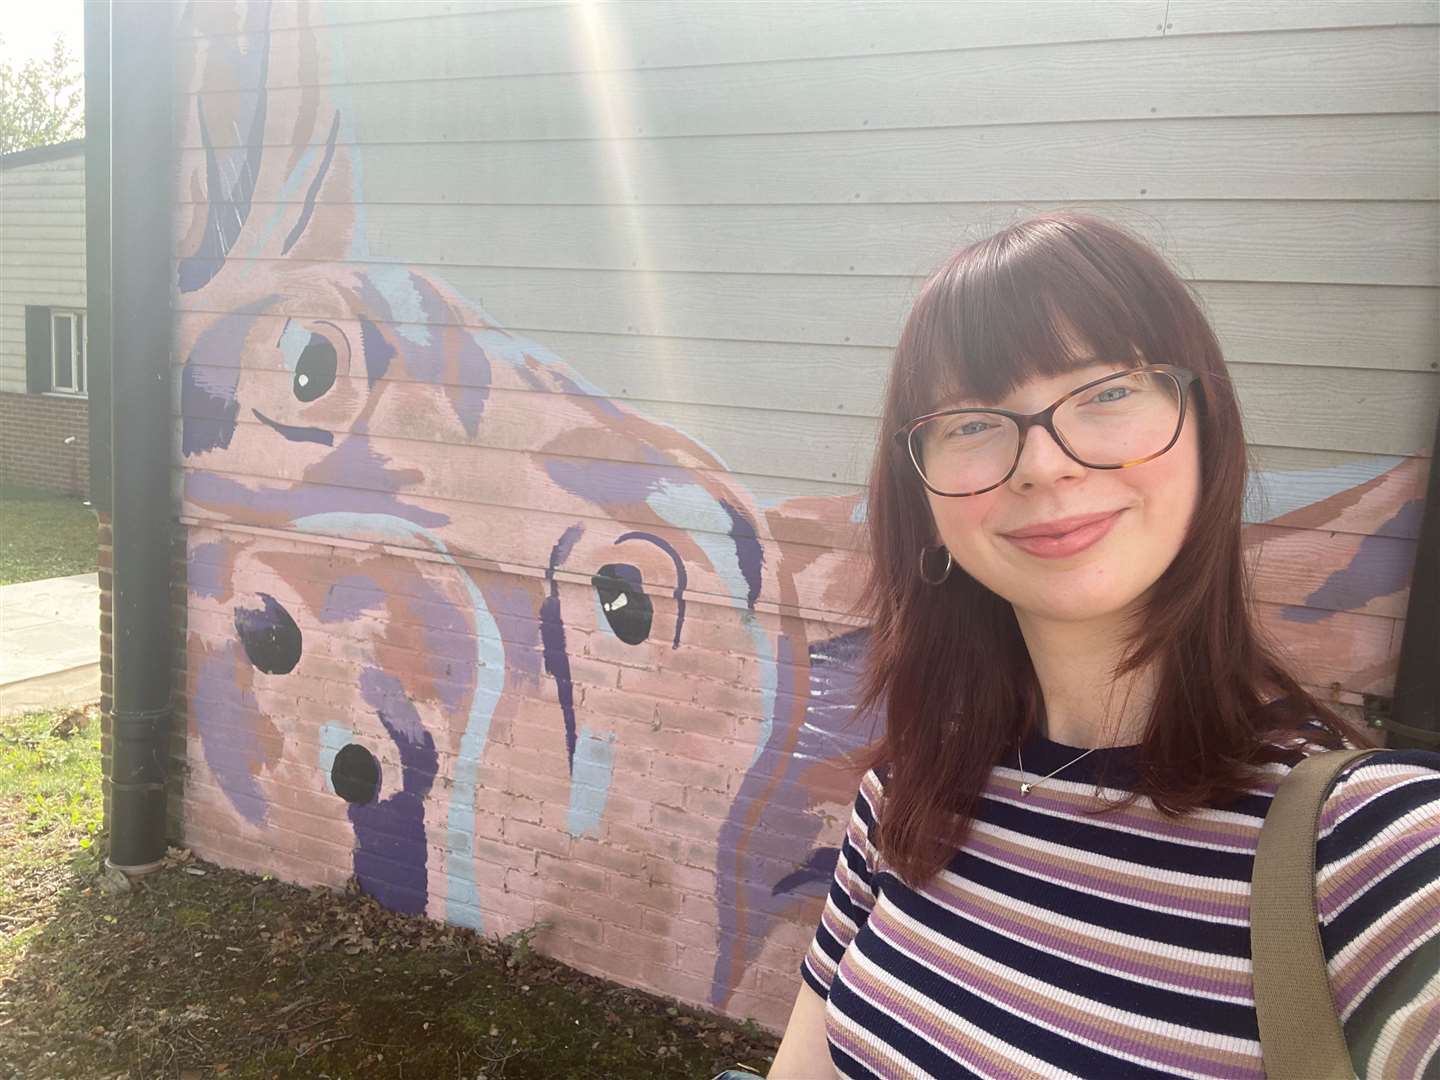 Reporter Cara Simmonds next to the pig mural